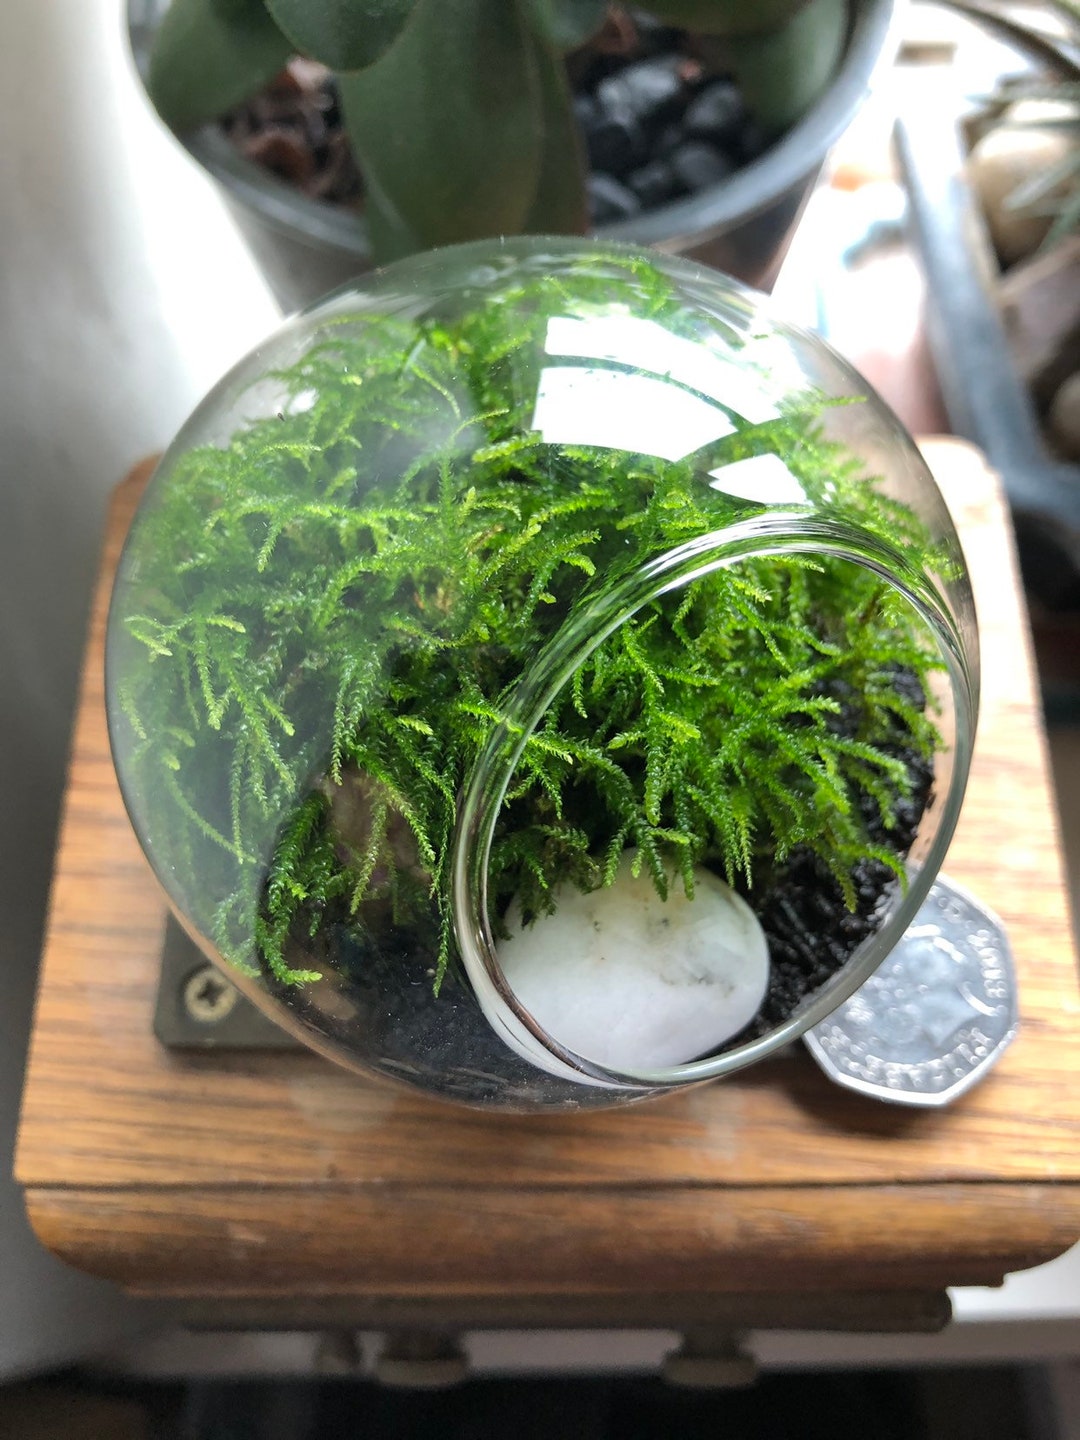 Marimo Moss Ball DIY Terrarium Kit - Fishbowl - wilderne